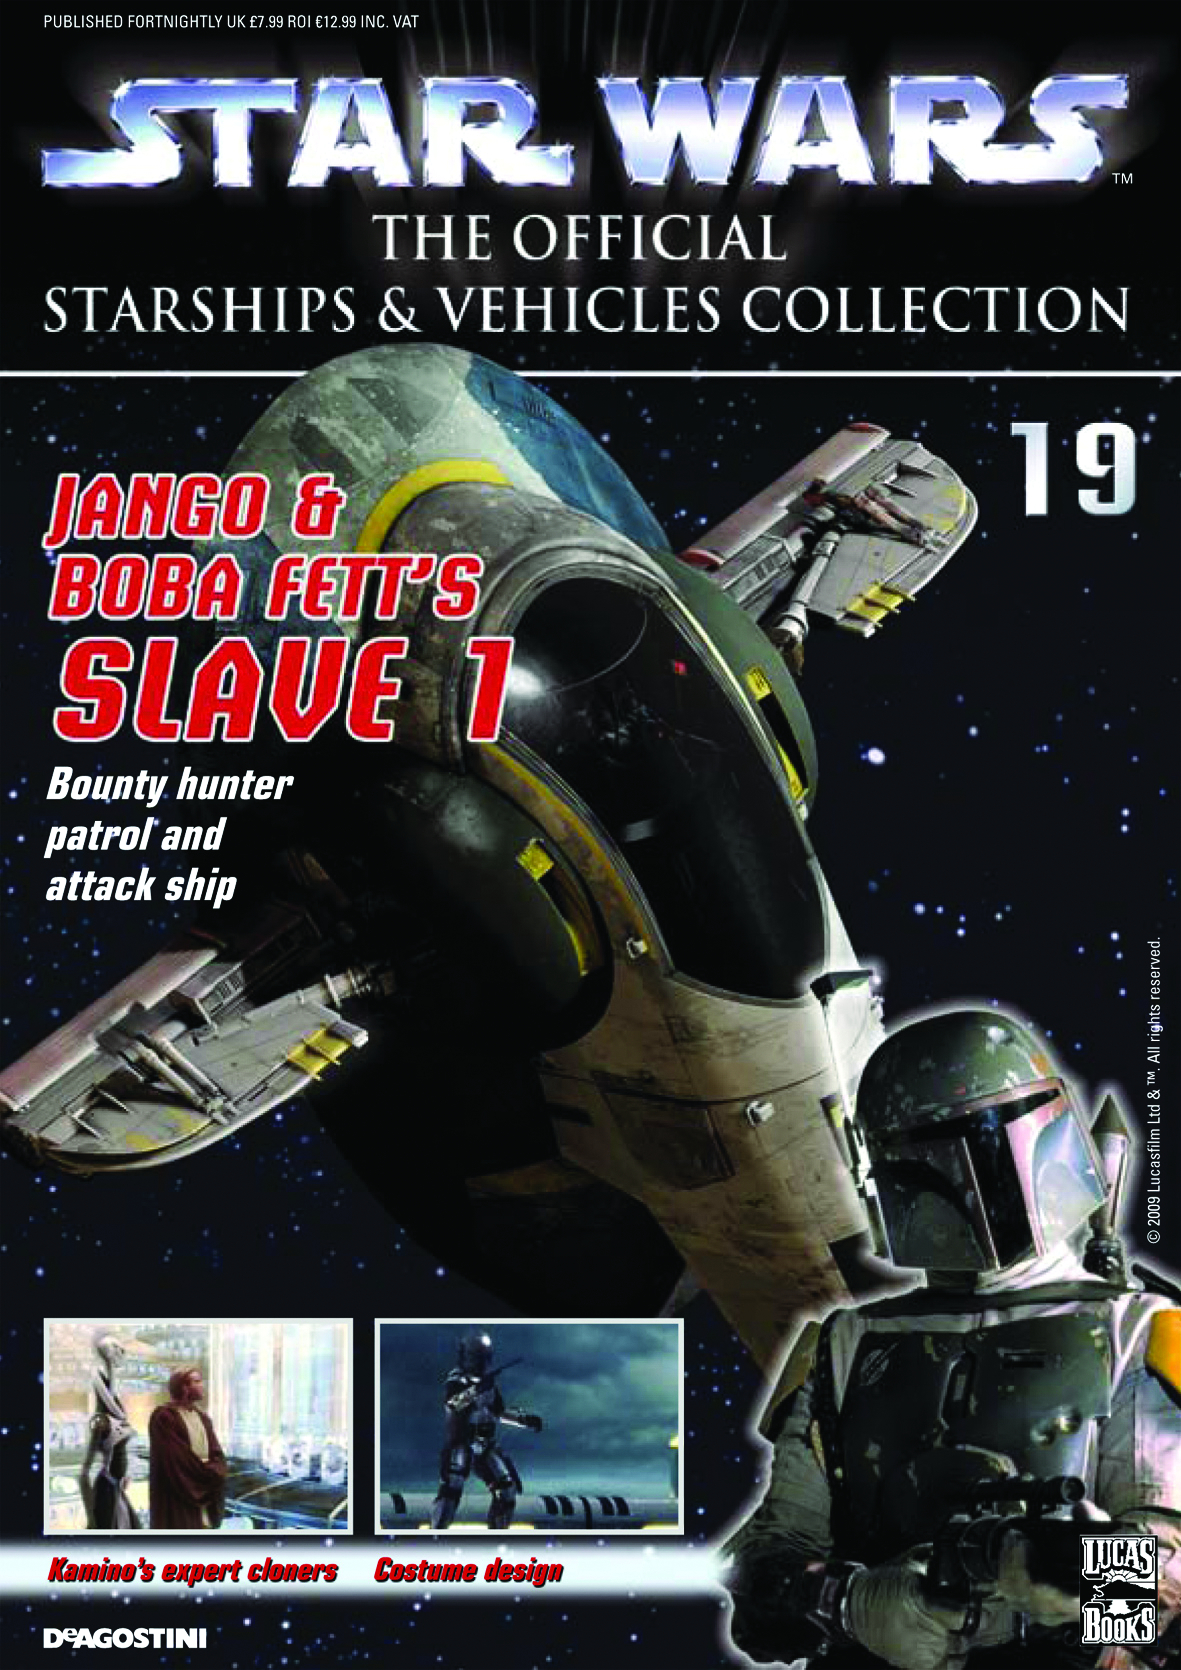 STAR WARS DEAGOSTINI STARSHIPS & VEHICLES SLAVE 1 ISSUE 19 